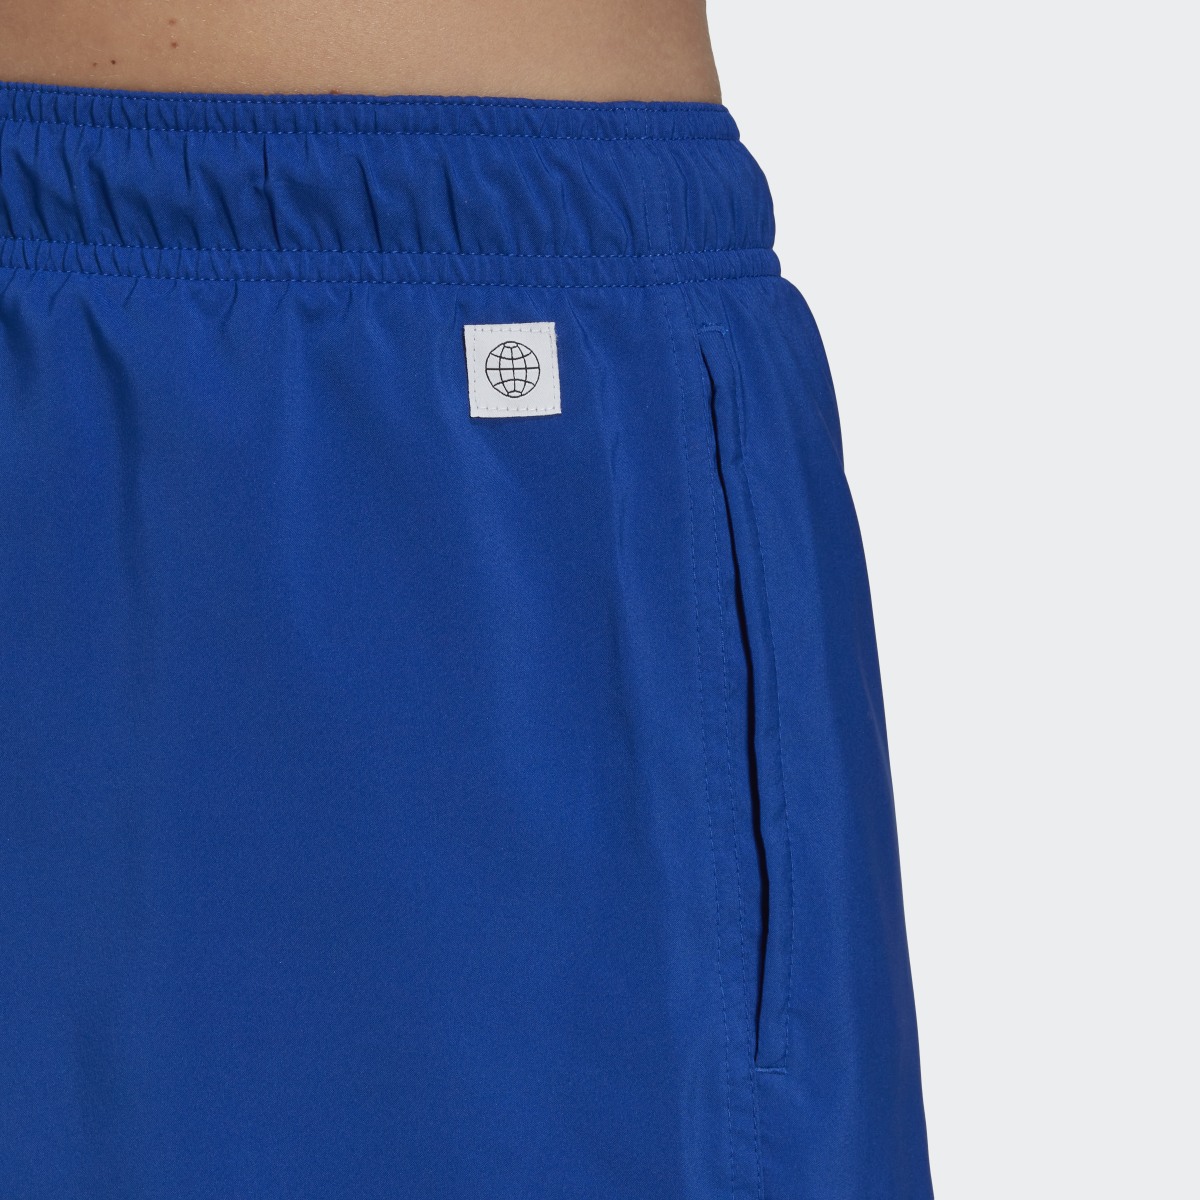 Adidas Short Length Solid Swim Shorts. 6